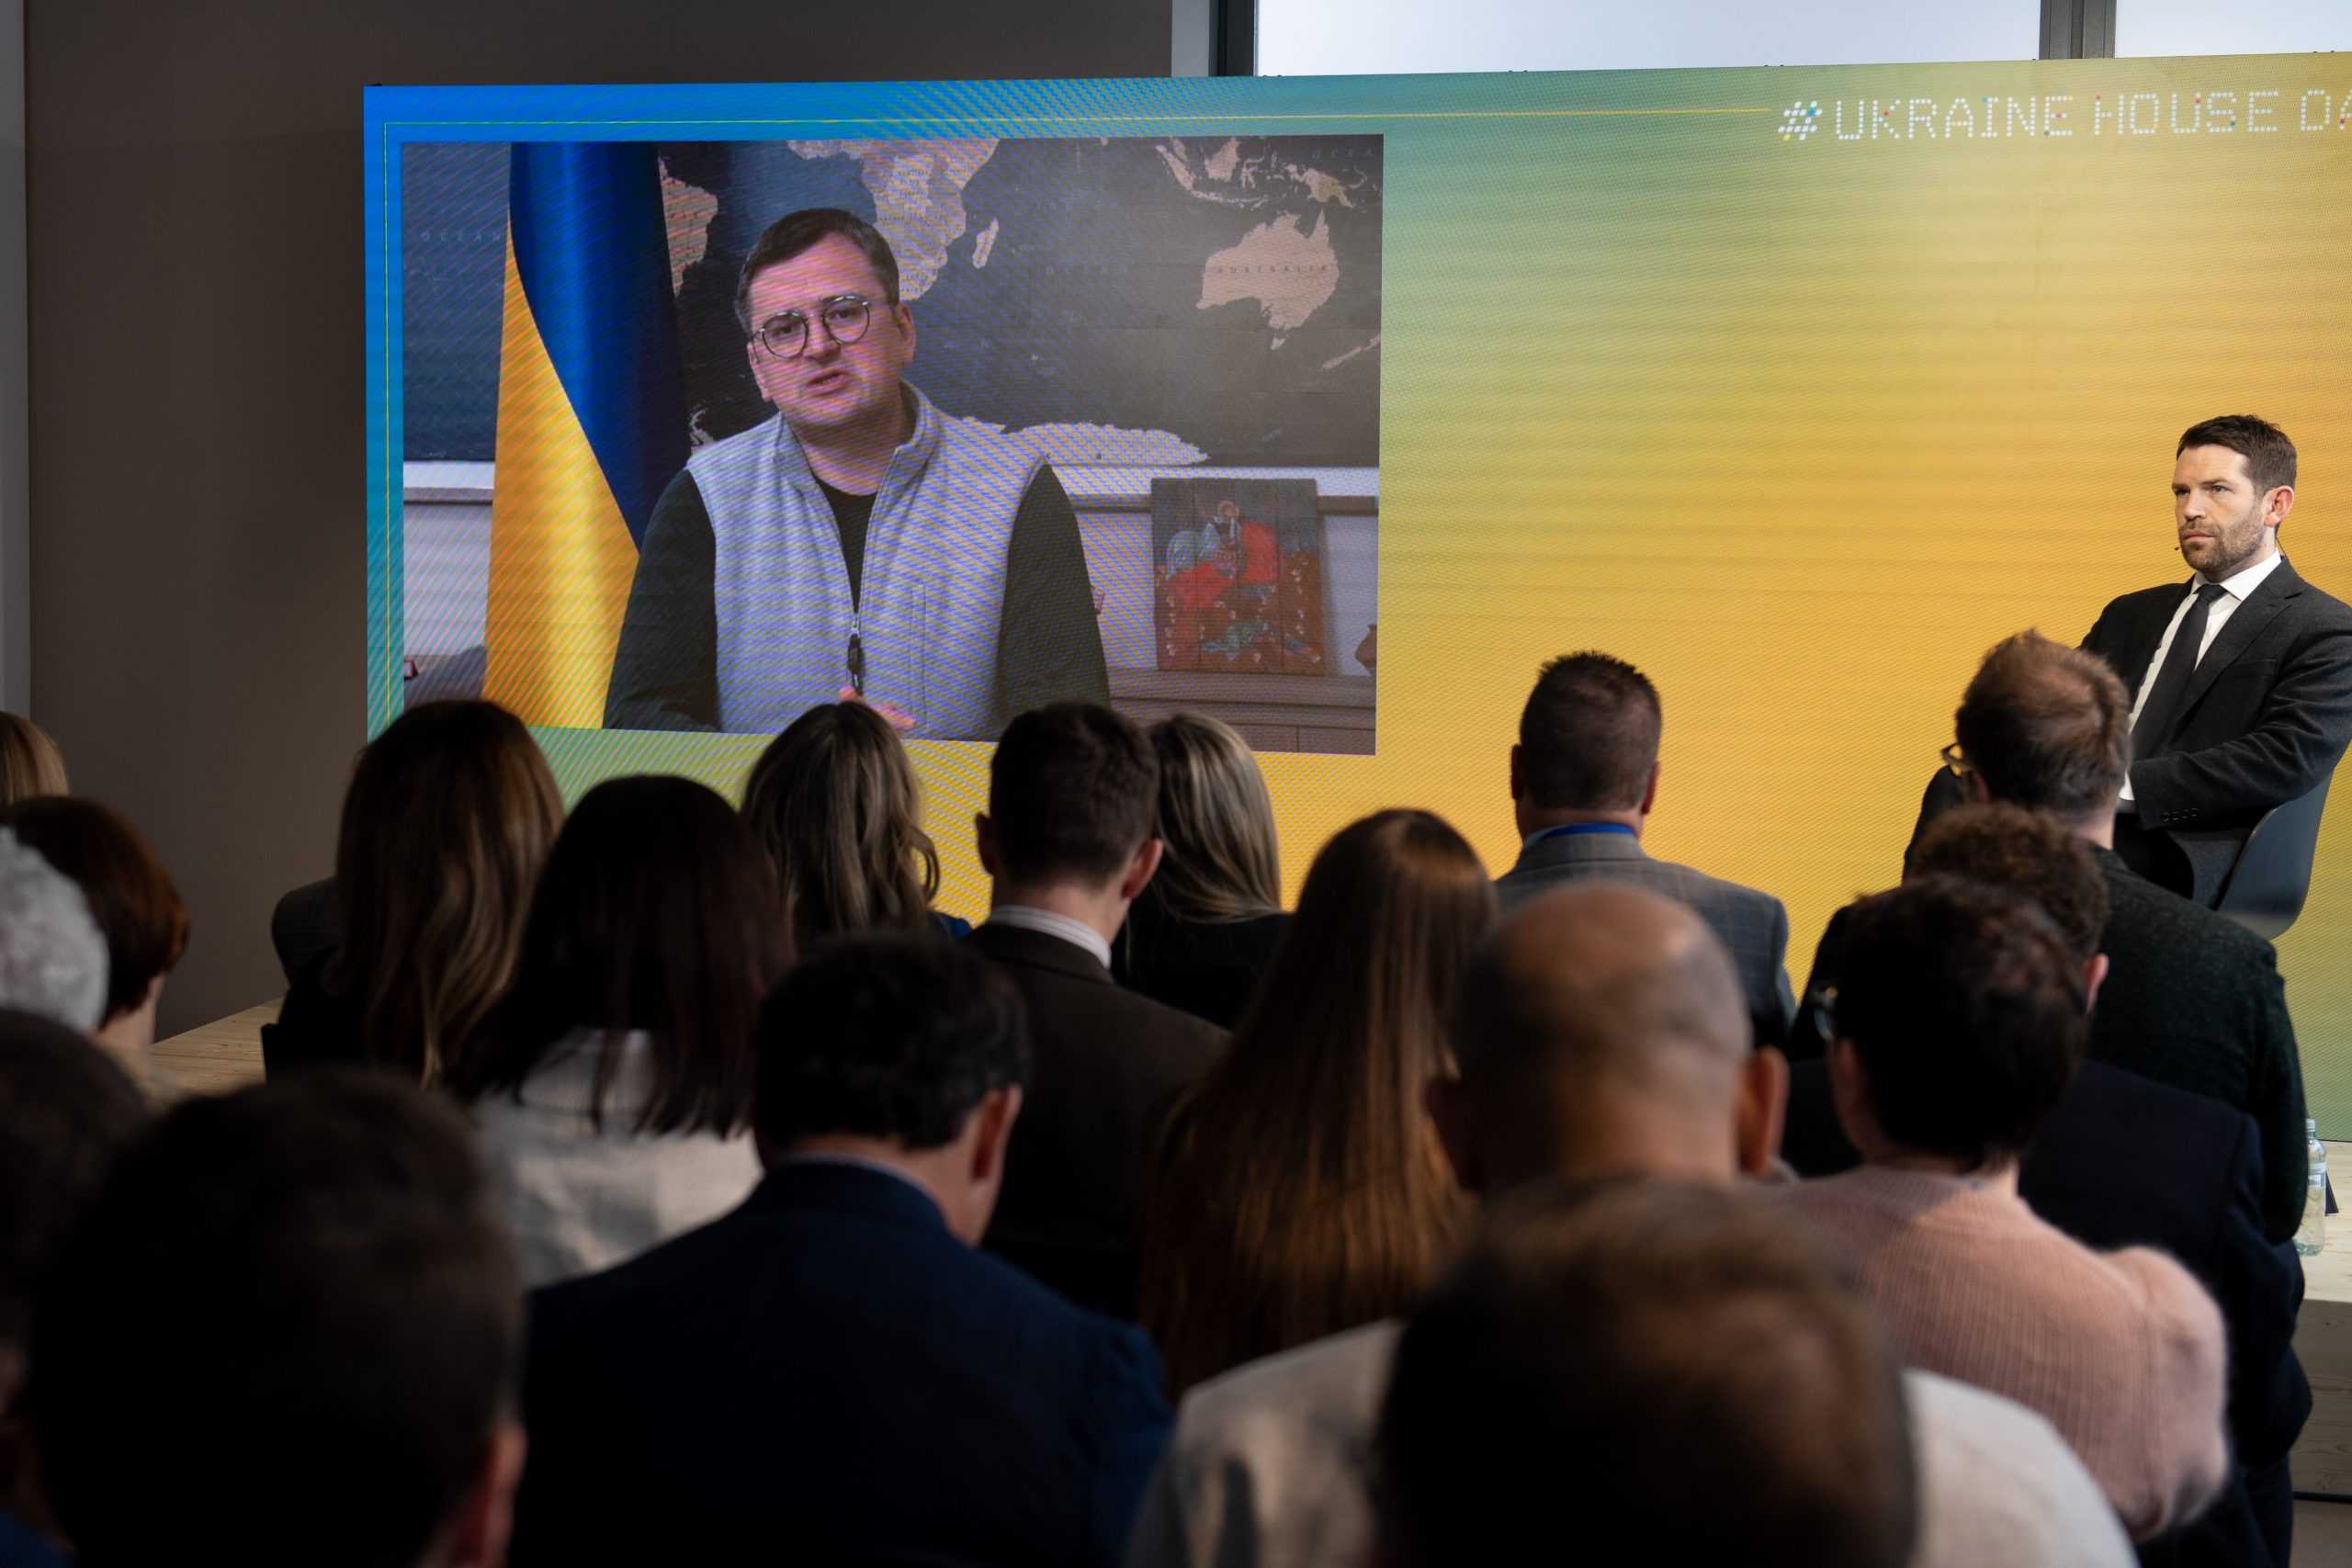 UKRAINE HOUSE DAVOS CLOSES WITH CONVERSATIONS ON UKRAINE’S POST-VICTORY FUTURE